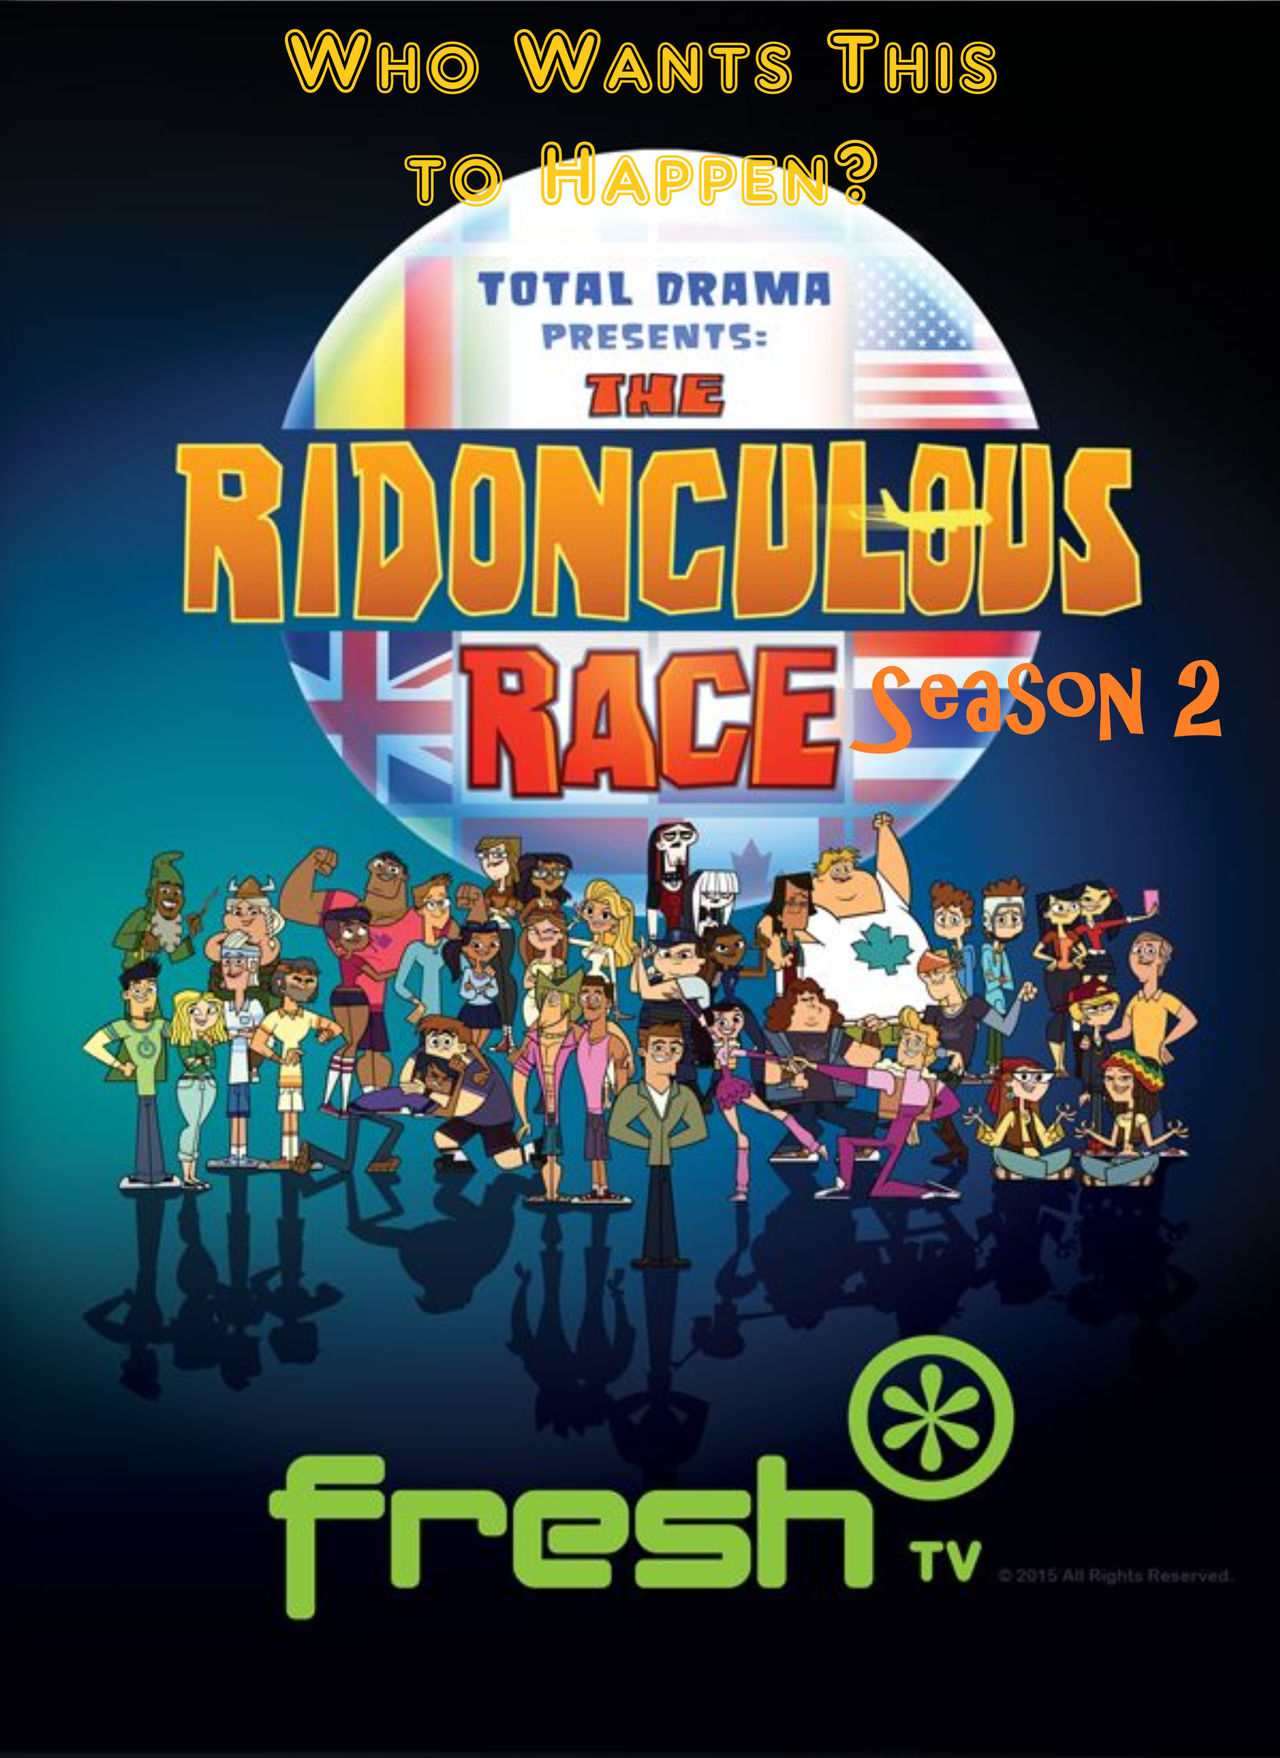 Total Drama: The Ridonculous Race Season 2 by lonerpx on DeviantArt